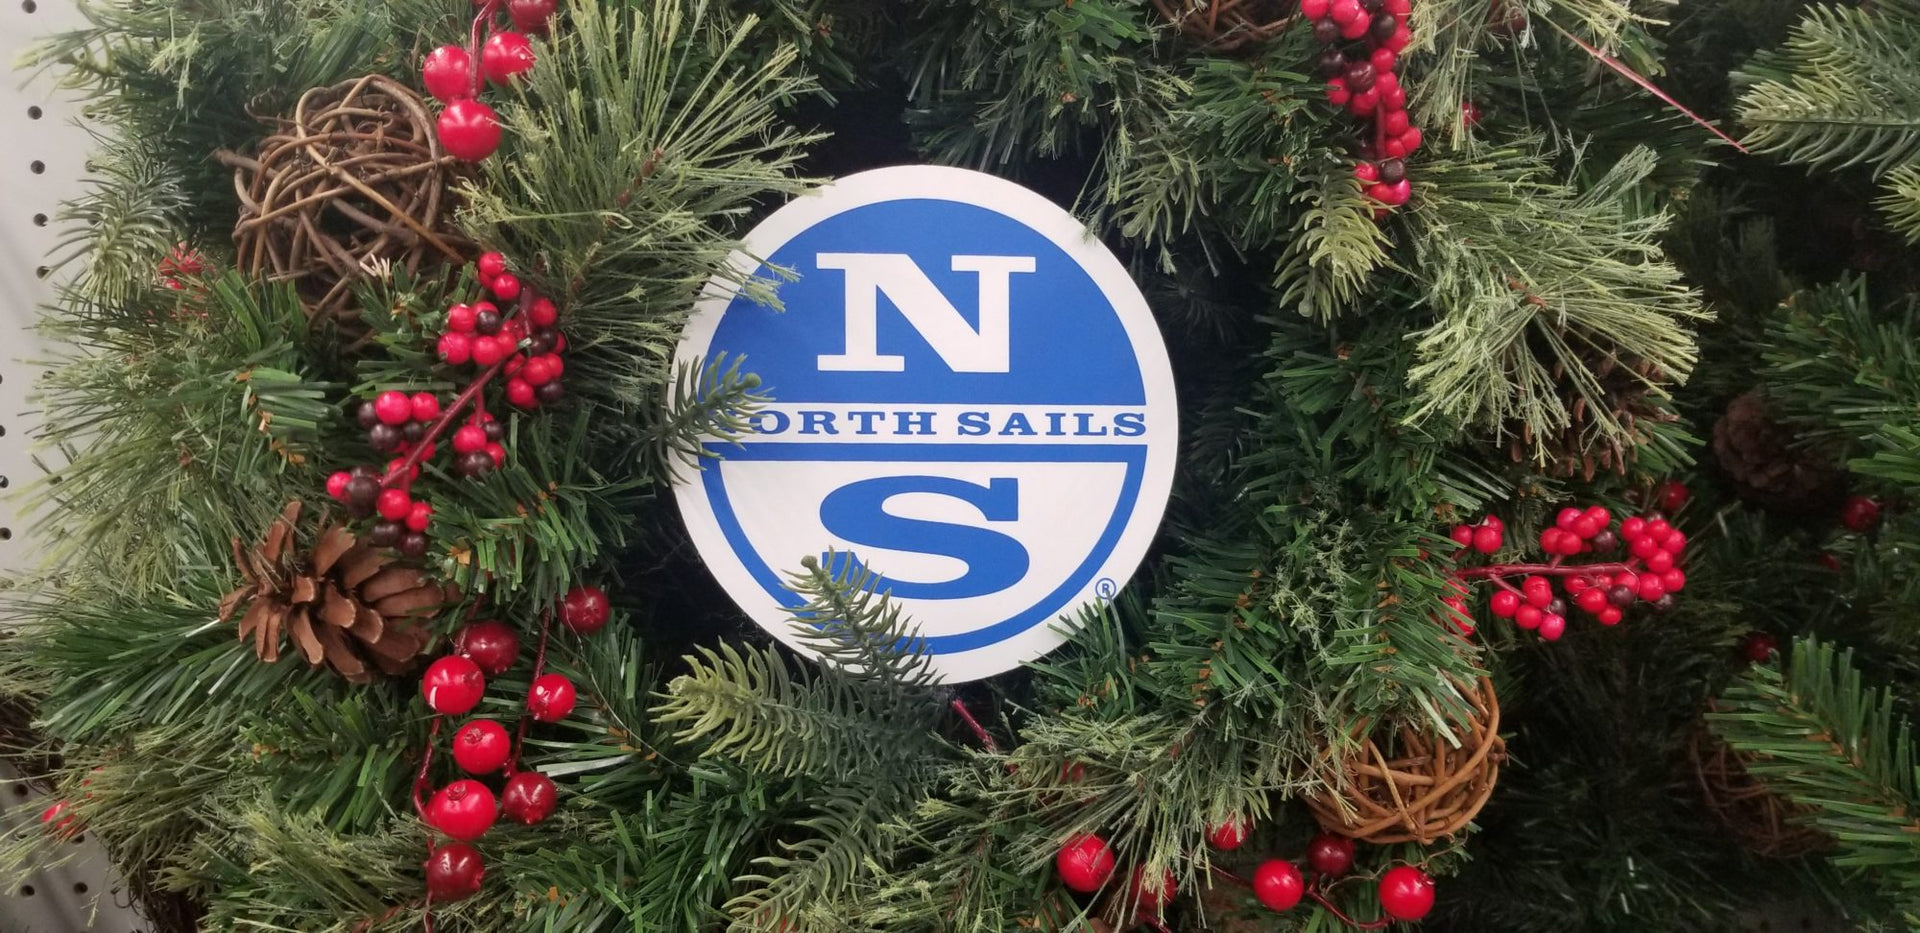 NORTH SAILS FOR CHRISTMAS